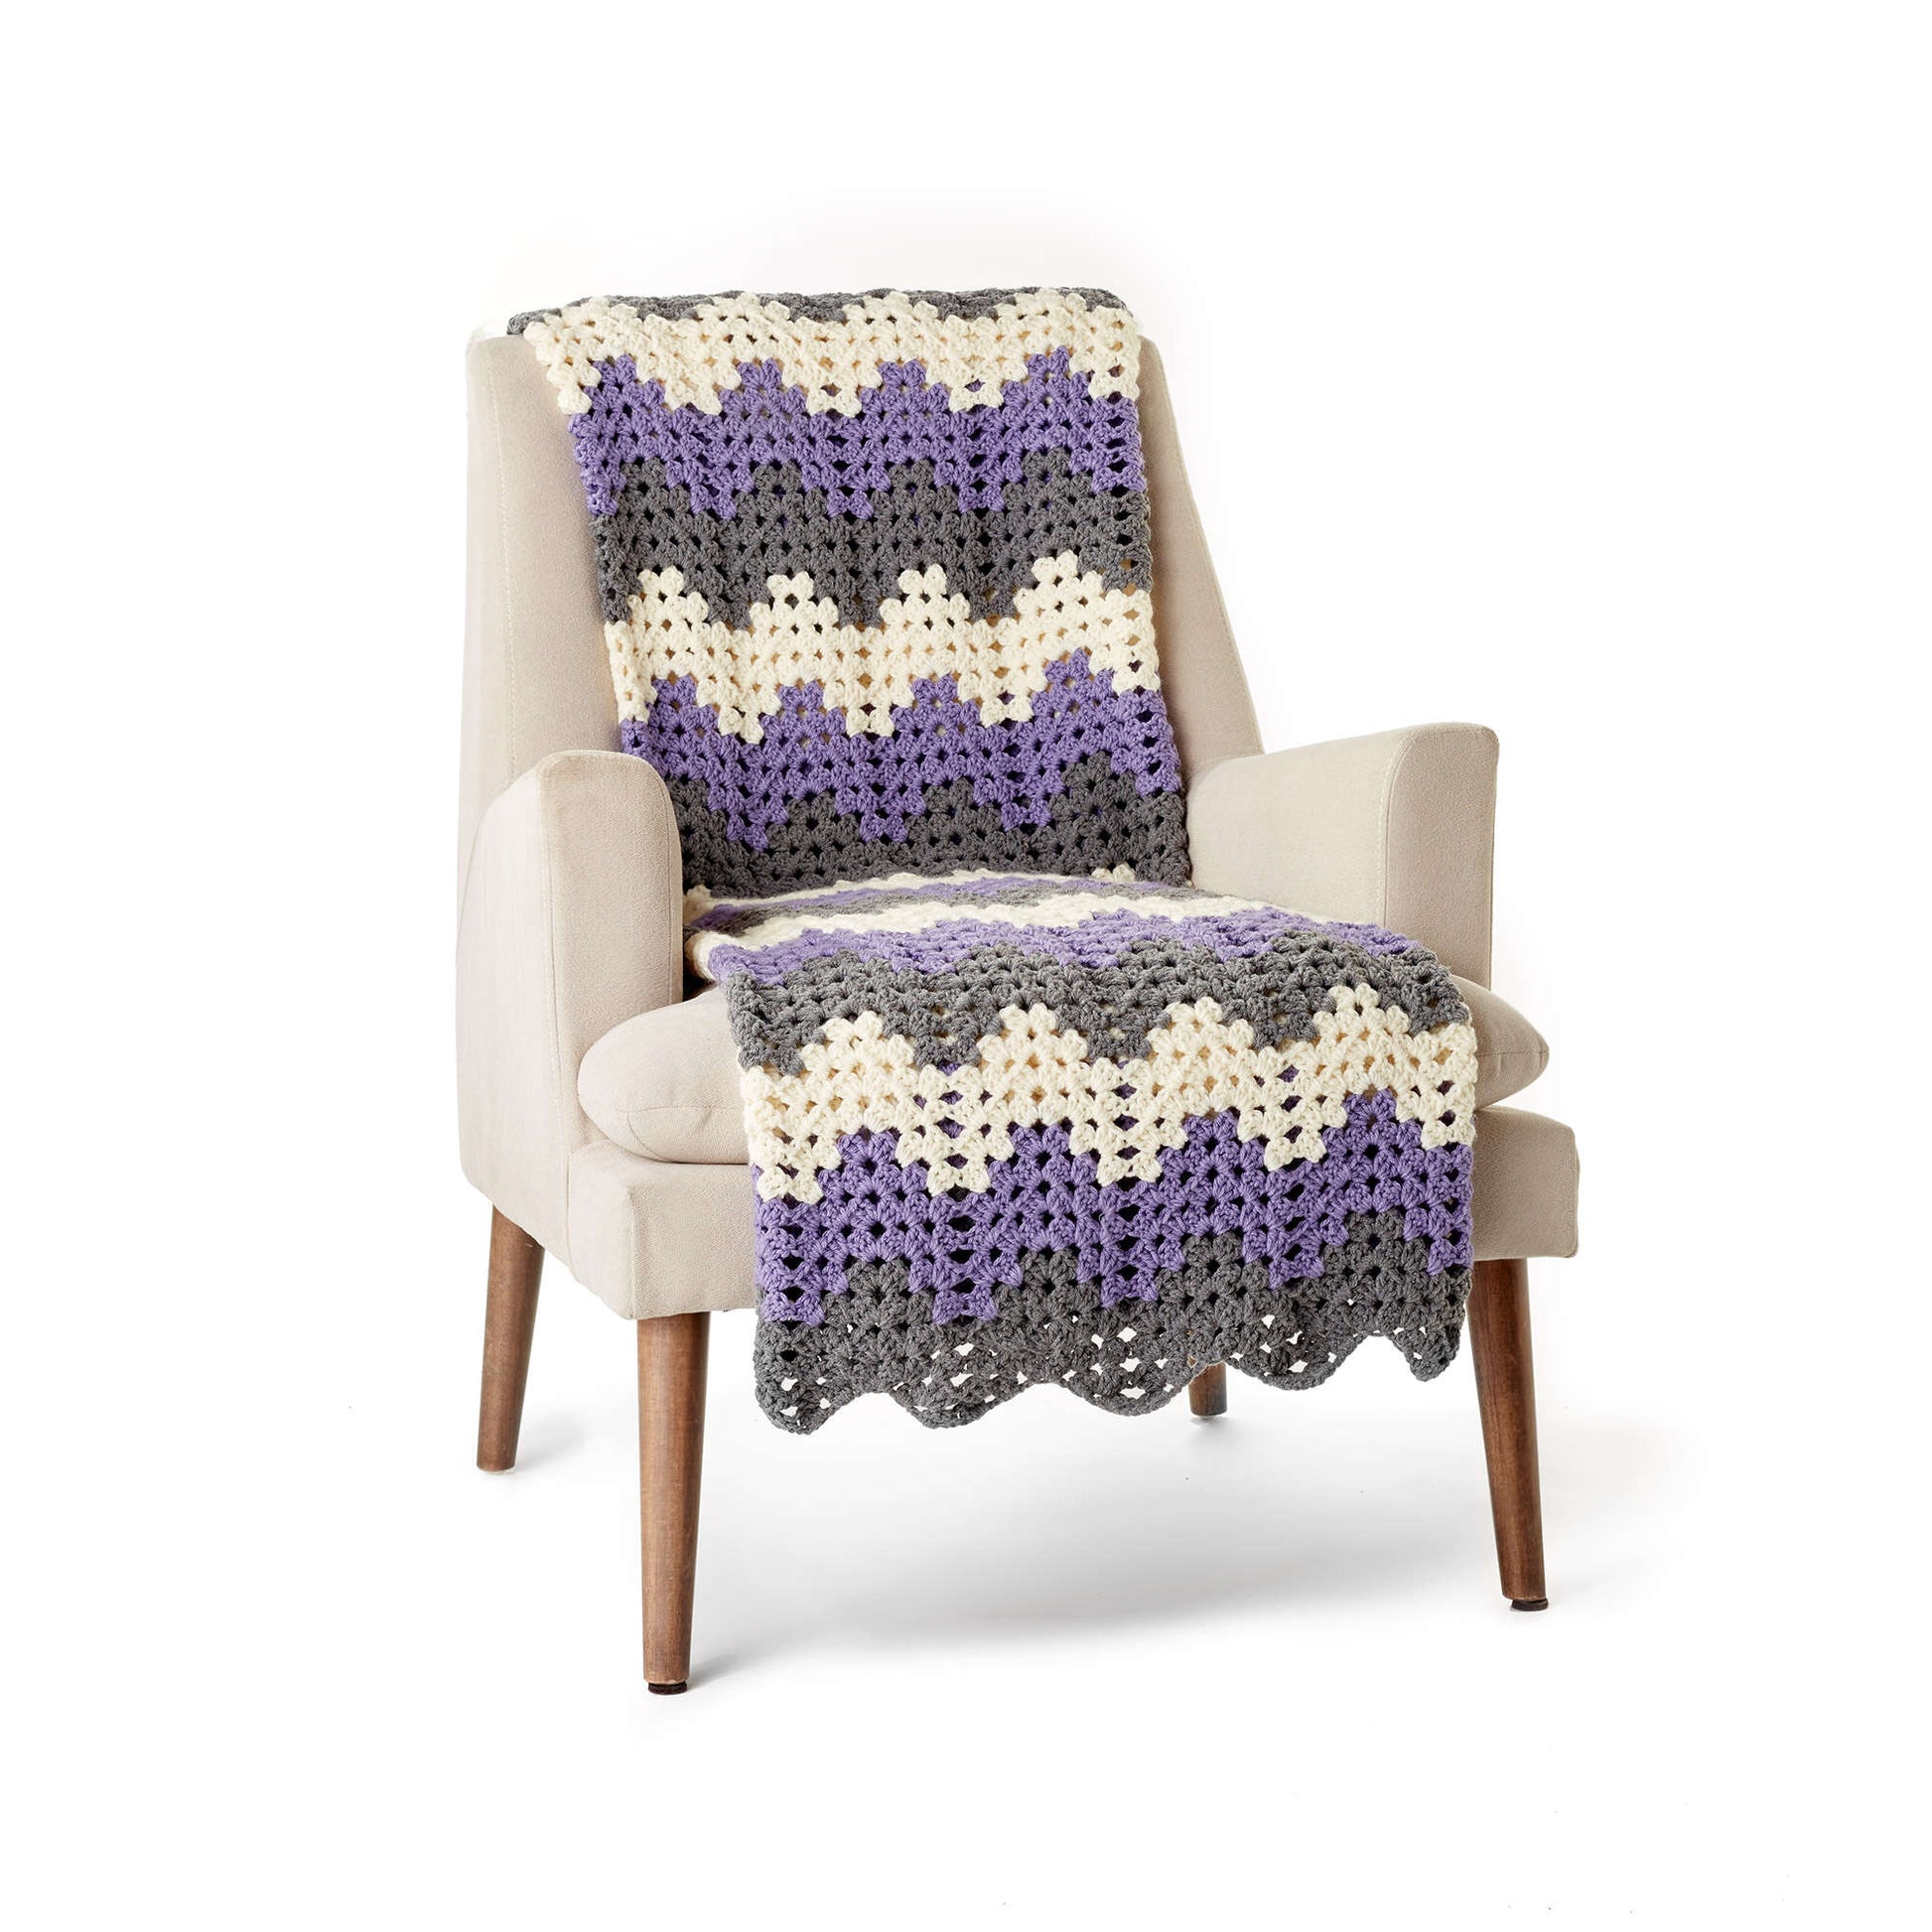 Free Caron Crochet Granny Ripple Blanket Pattern